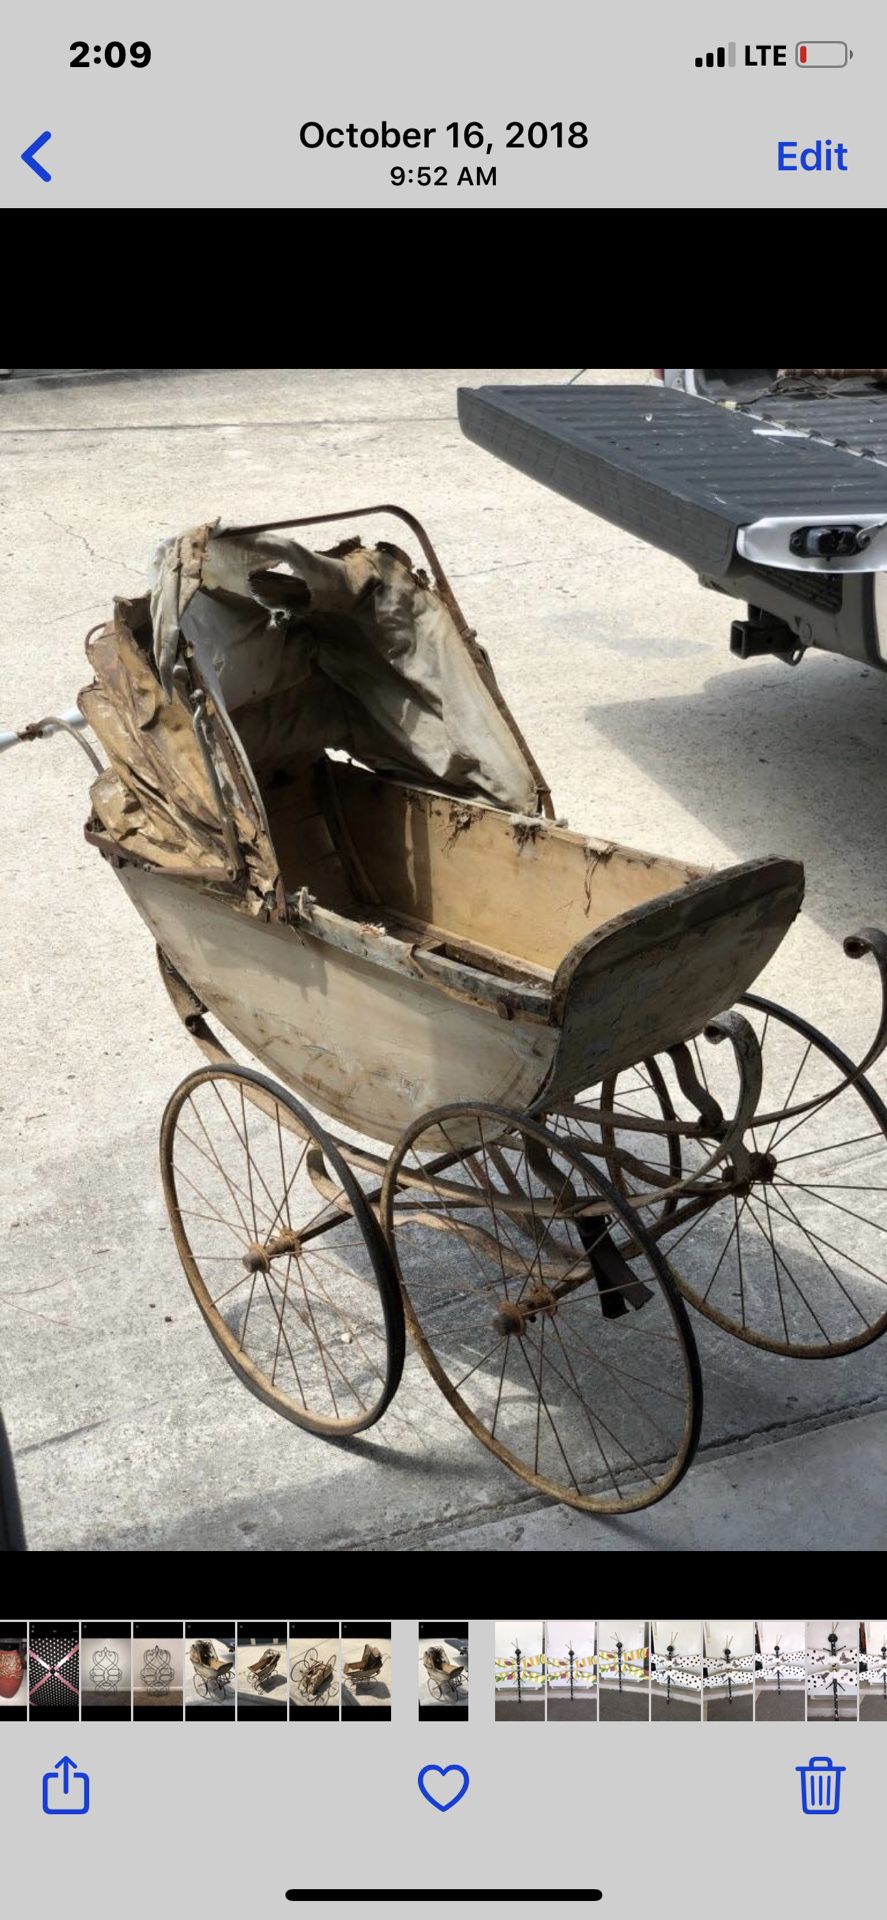 Antique baby stroller